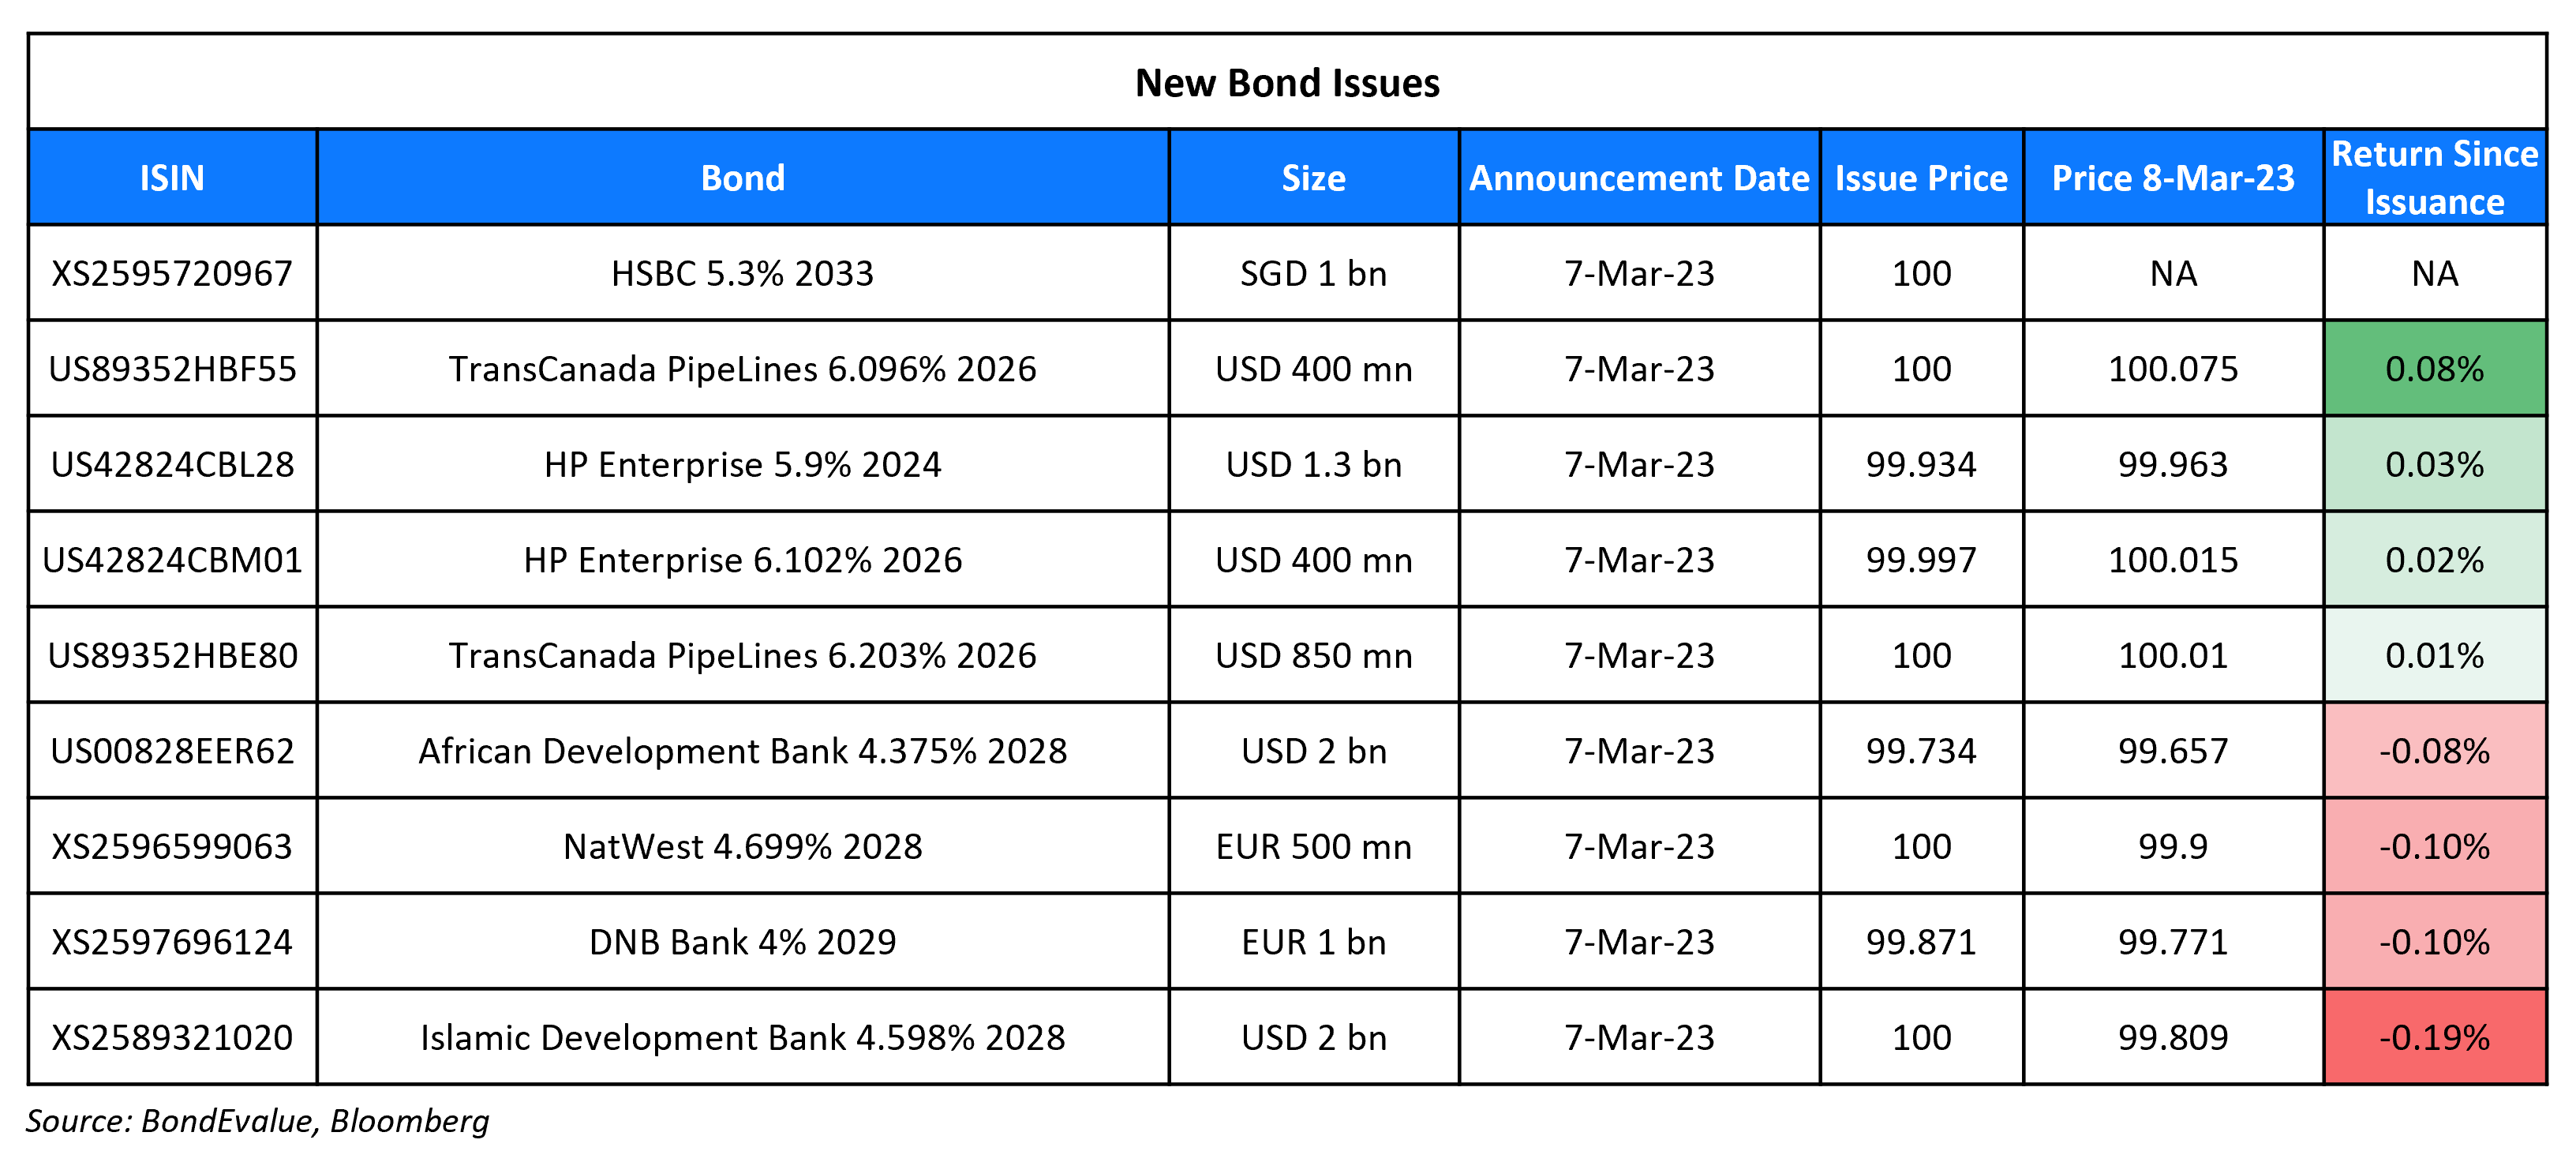 New Bond Issues 8 Mar 23